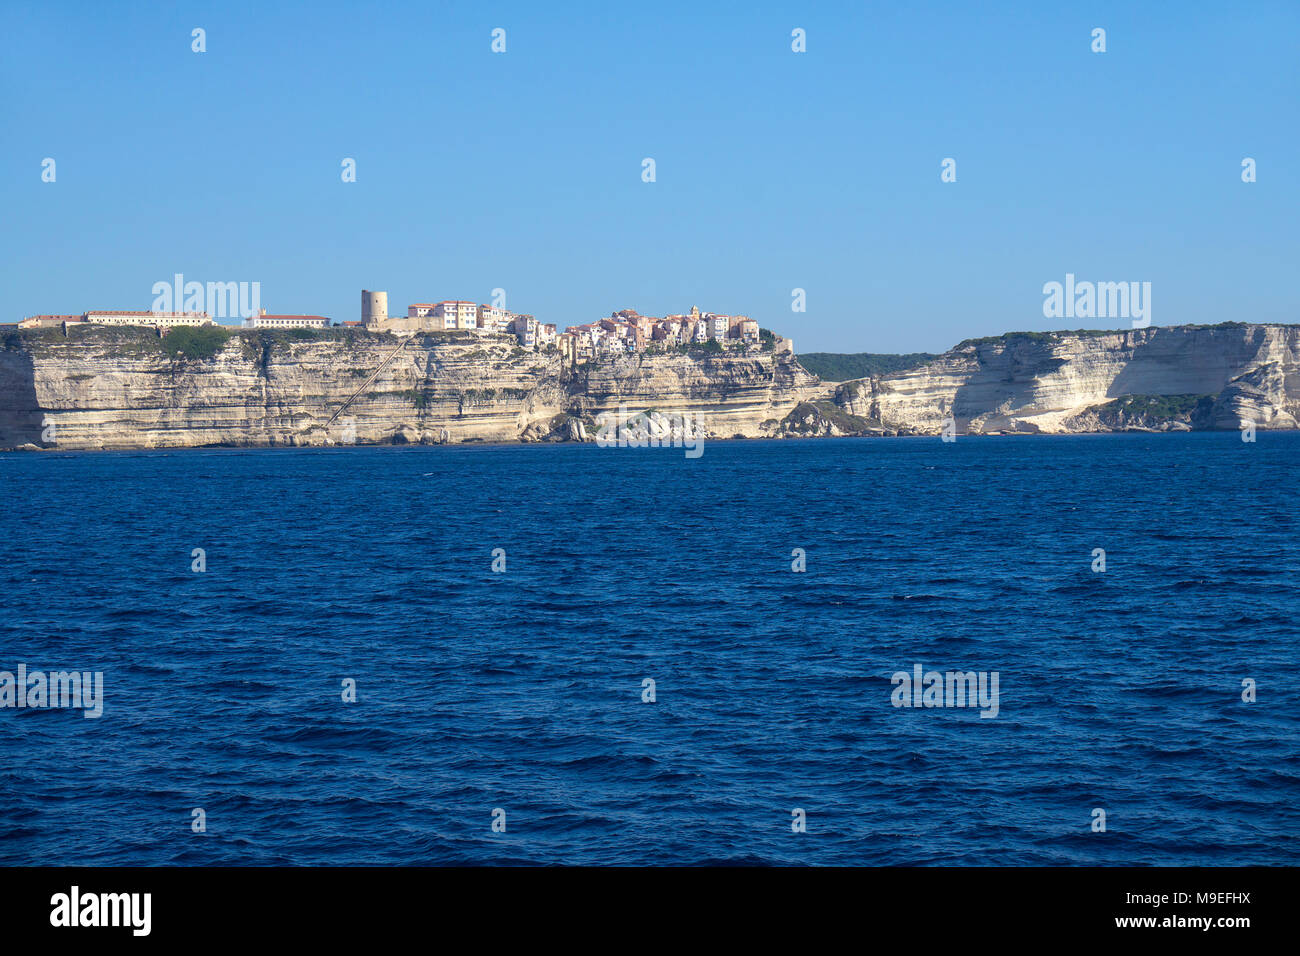 Bonifacio, old historic harbour town built on a limestone cliff, Strait of Bonifacio, Corsica, France, Mediterranean sea, Europe Stock Photo